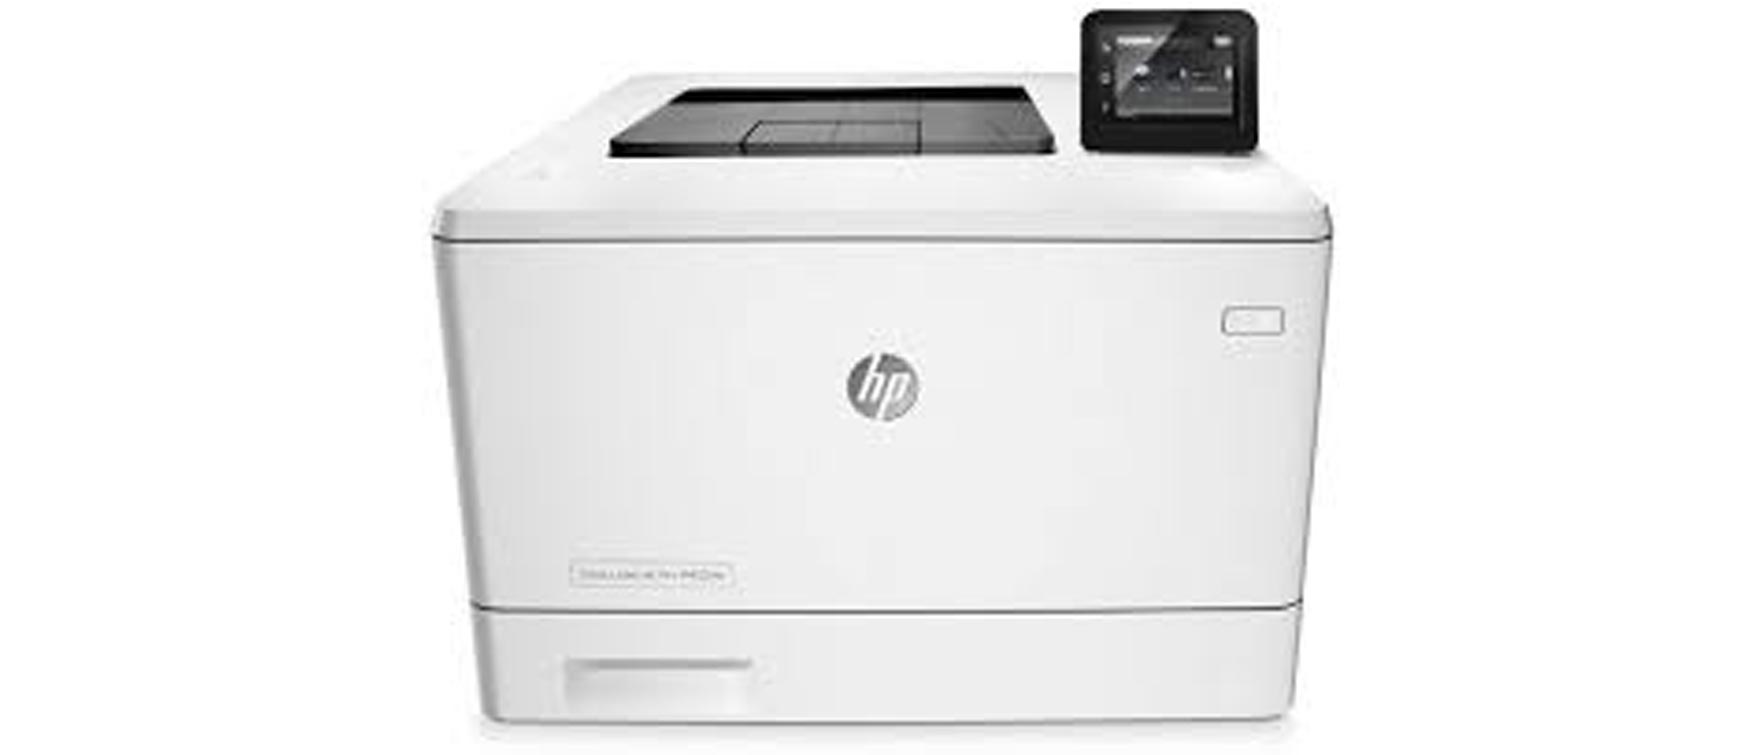 11. HP Laserjet Pro M452dw Wireless Color Printer